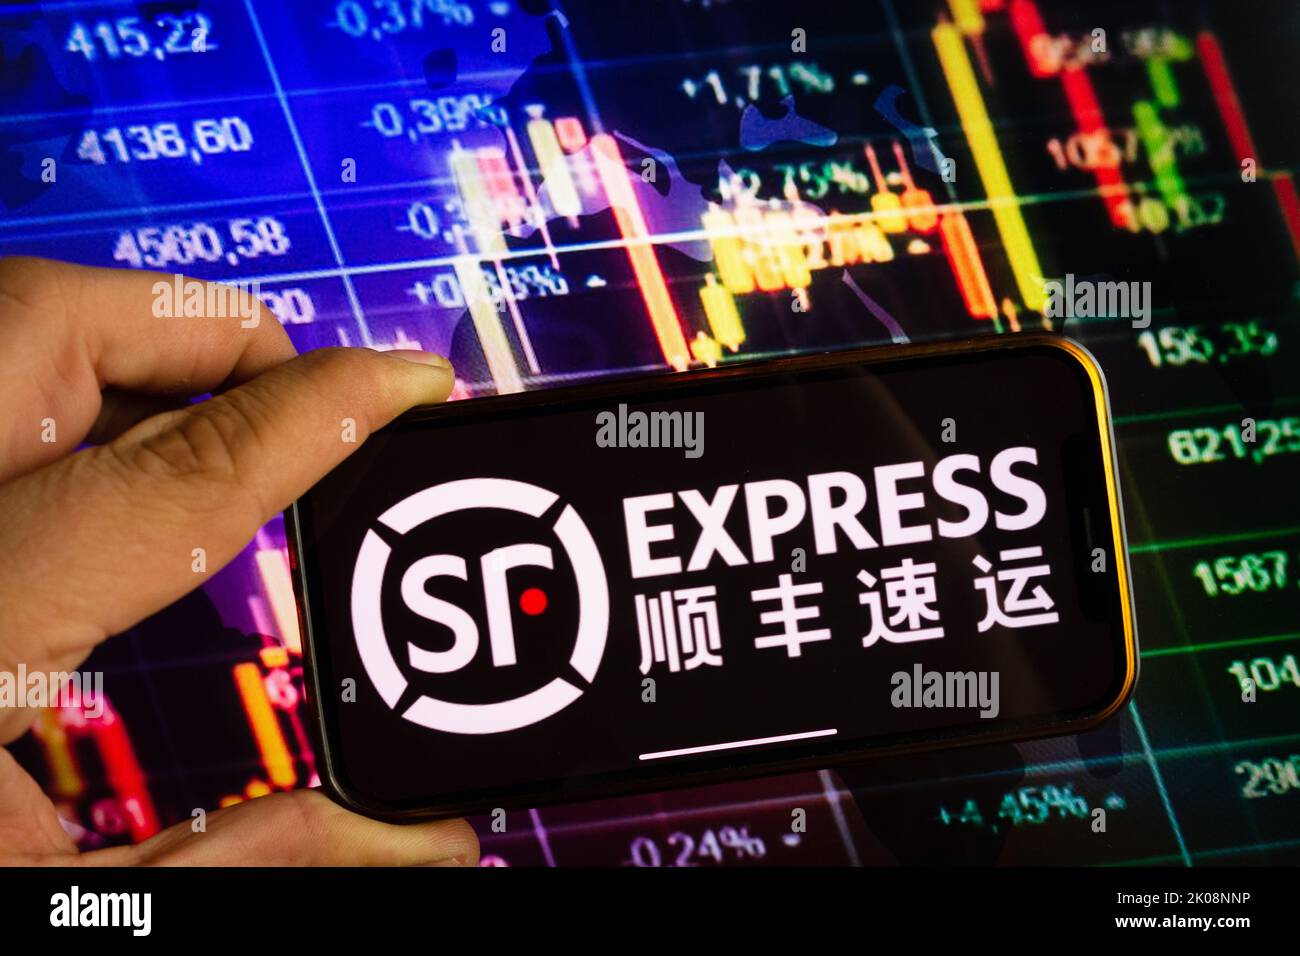 KONSKIE, POLAND - September 10, 2022: Smartphone displaying logo of SF Express company on stock exchange diagram background Stock Photo